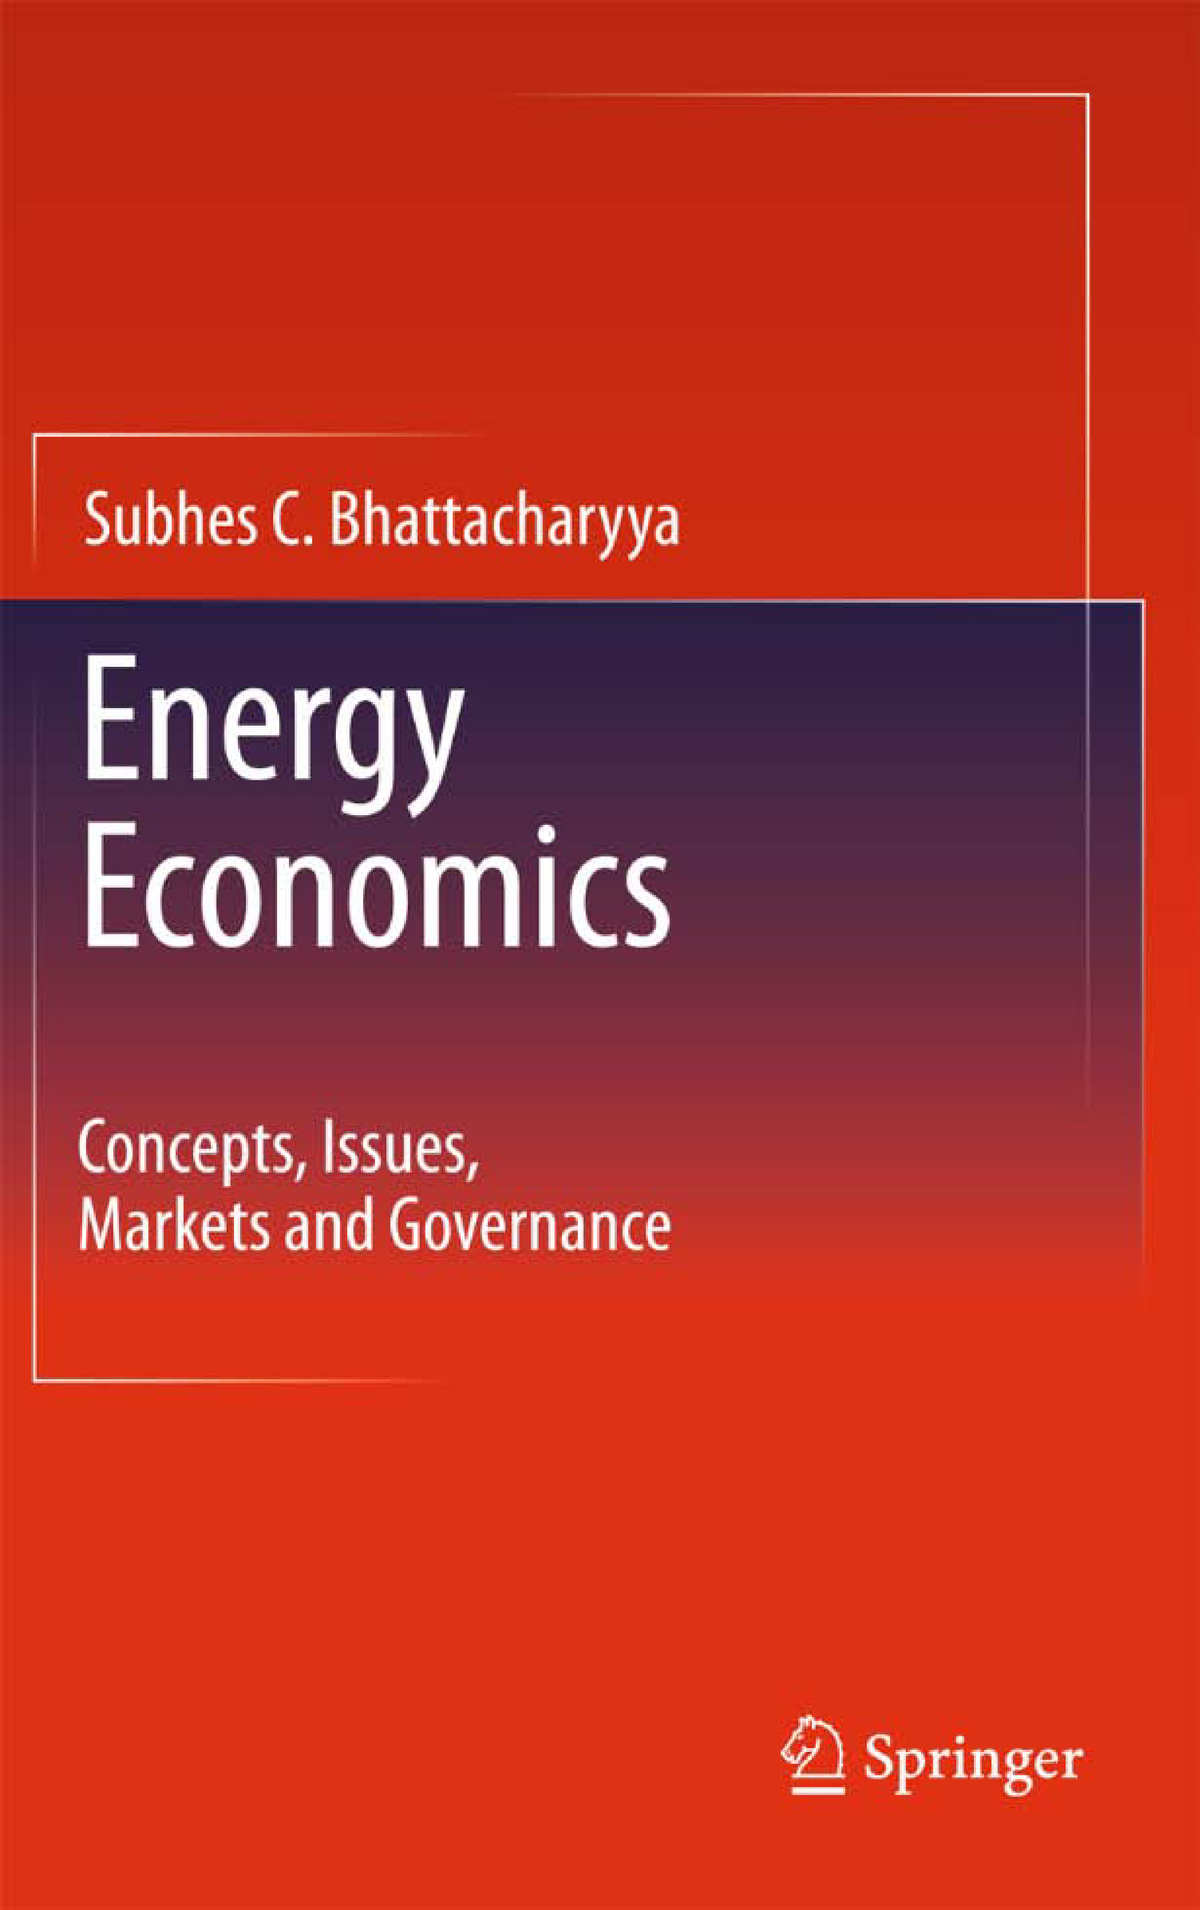 phd in energy economics in india